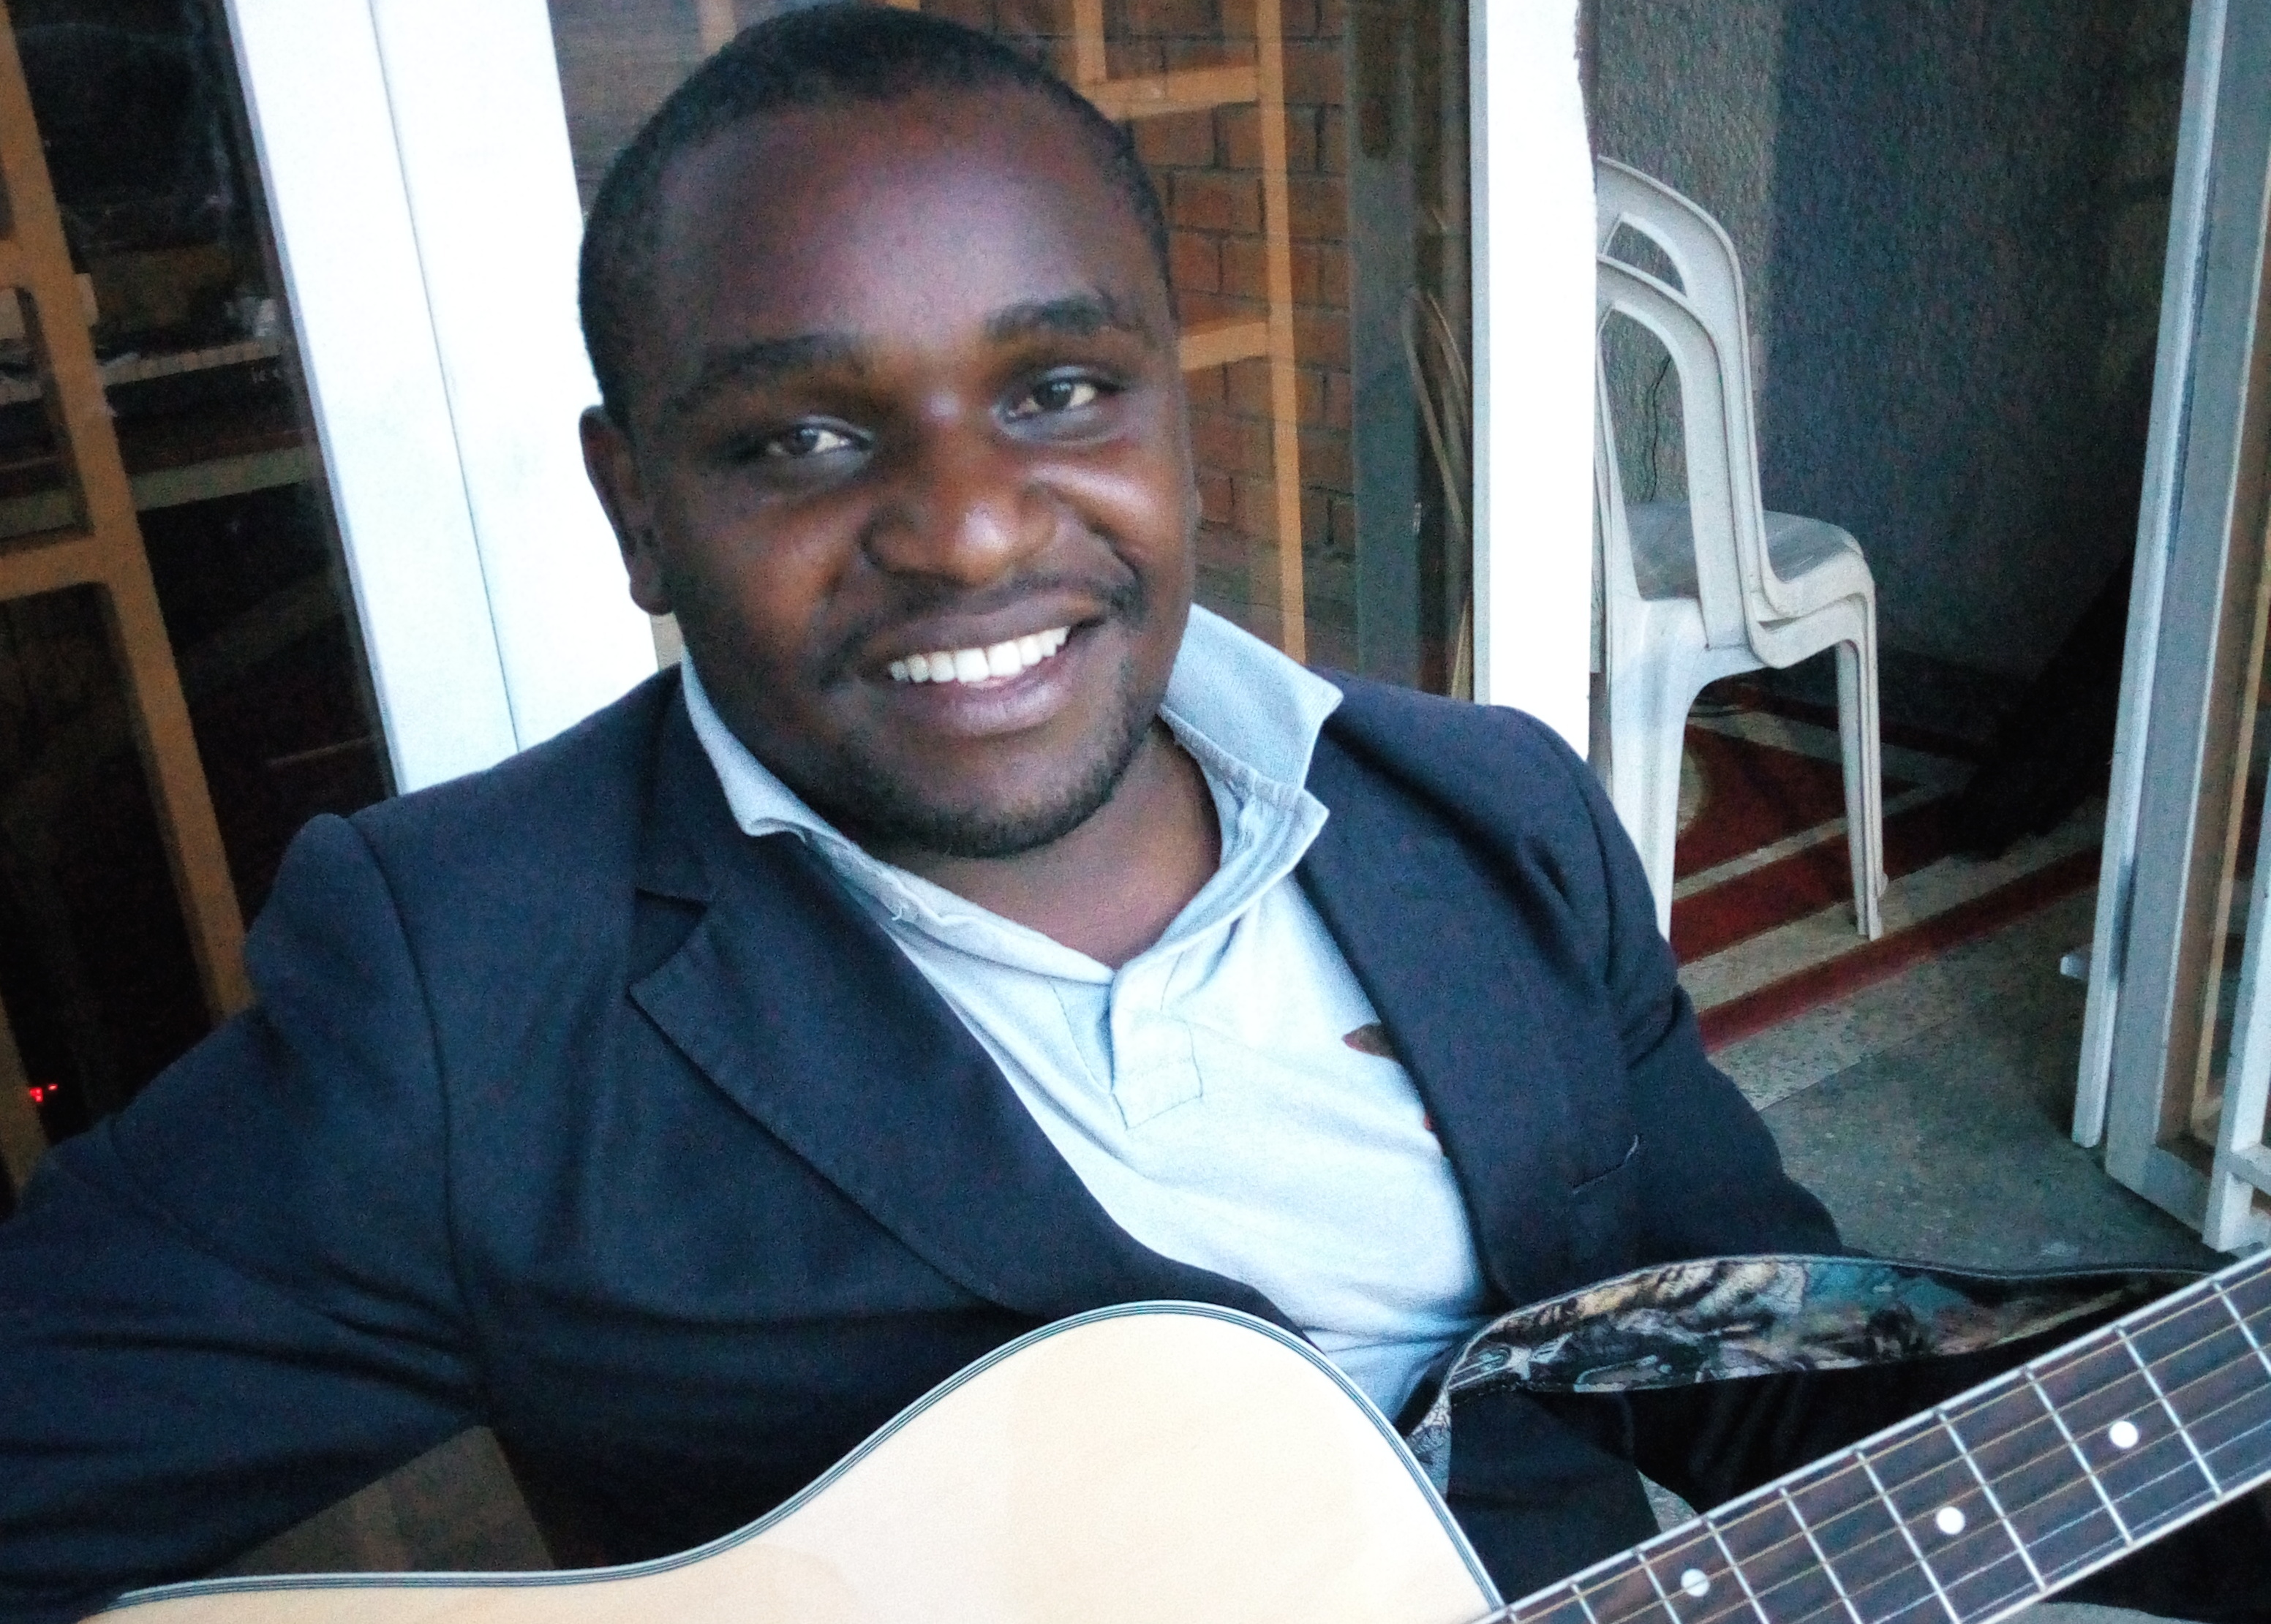 The Gospel Has Given Me Songs of Joy – Musanze, Rwanda